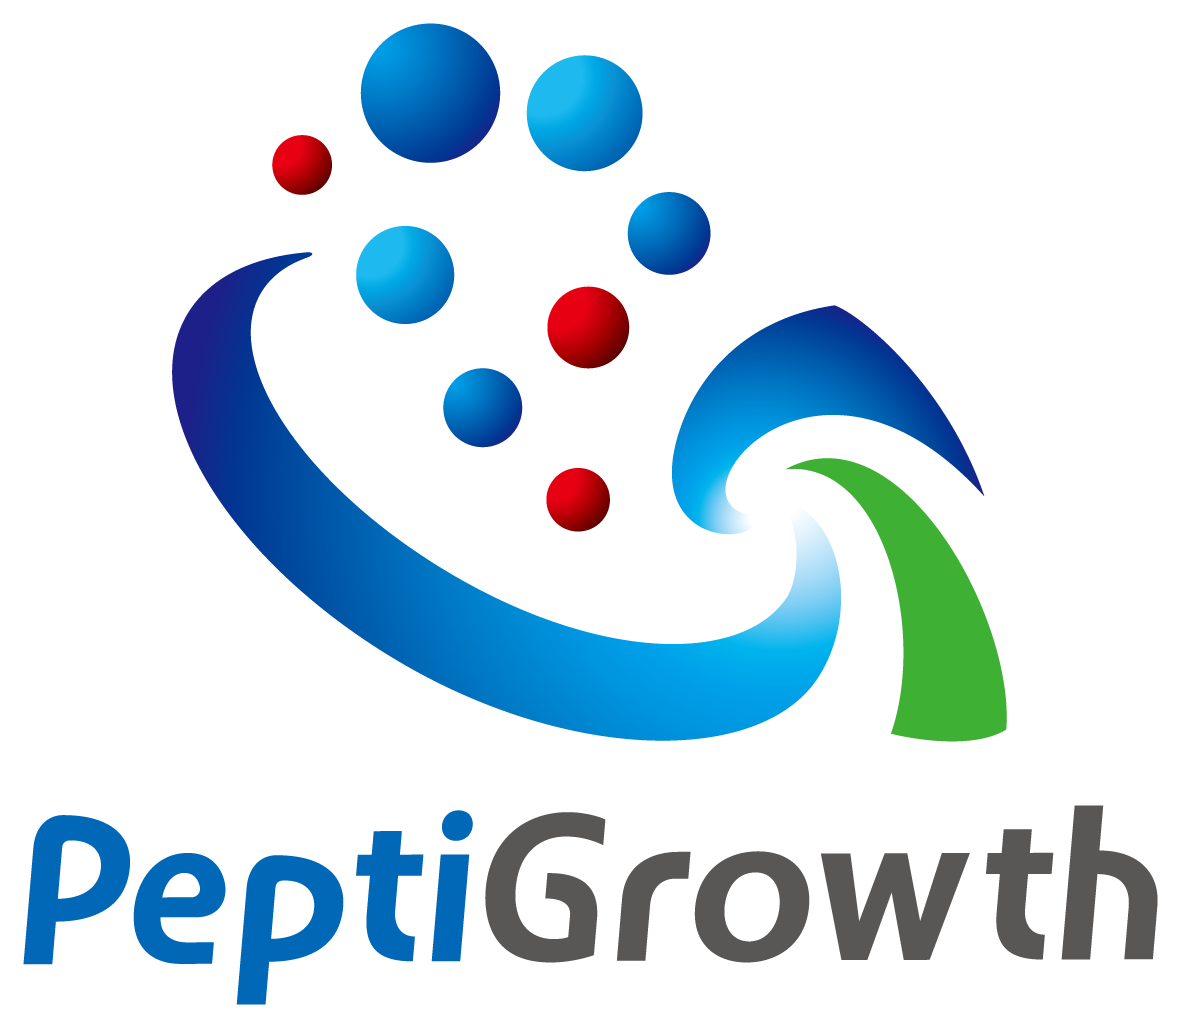 PeptiGrowth logo